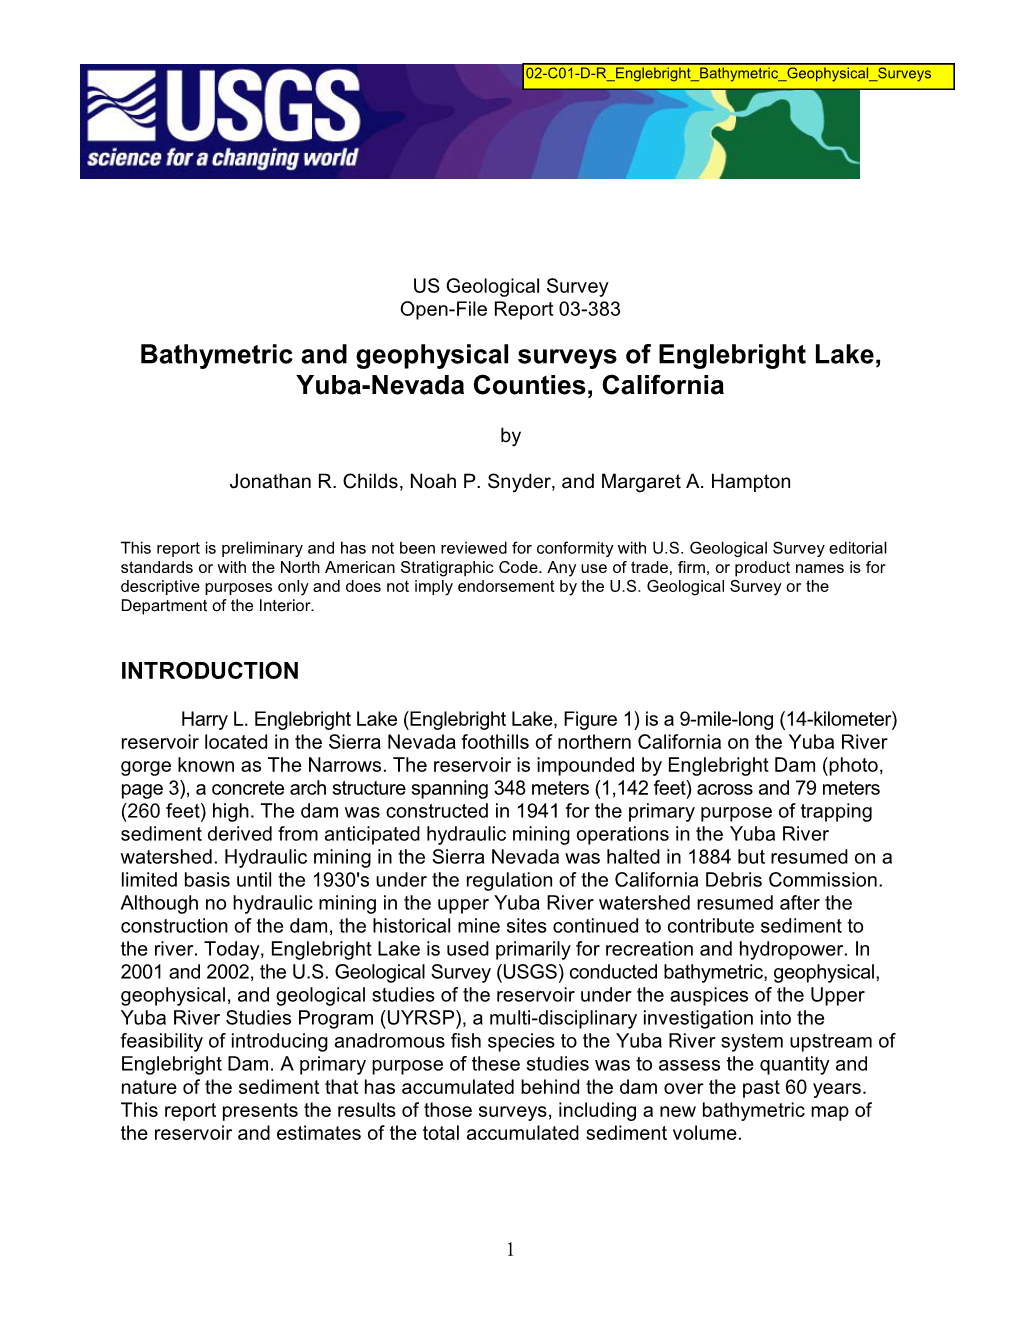 Bathymetric and Geophysical Surveys of Englebright Lake, Yuba-Nevada Counties, California